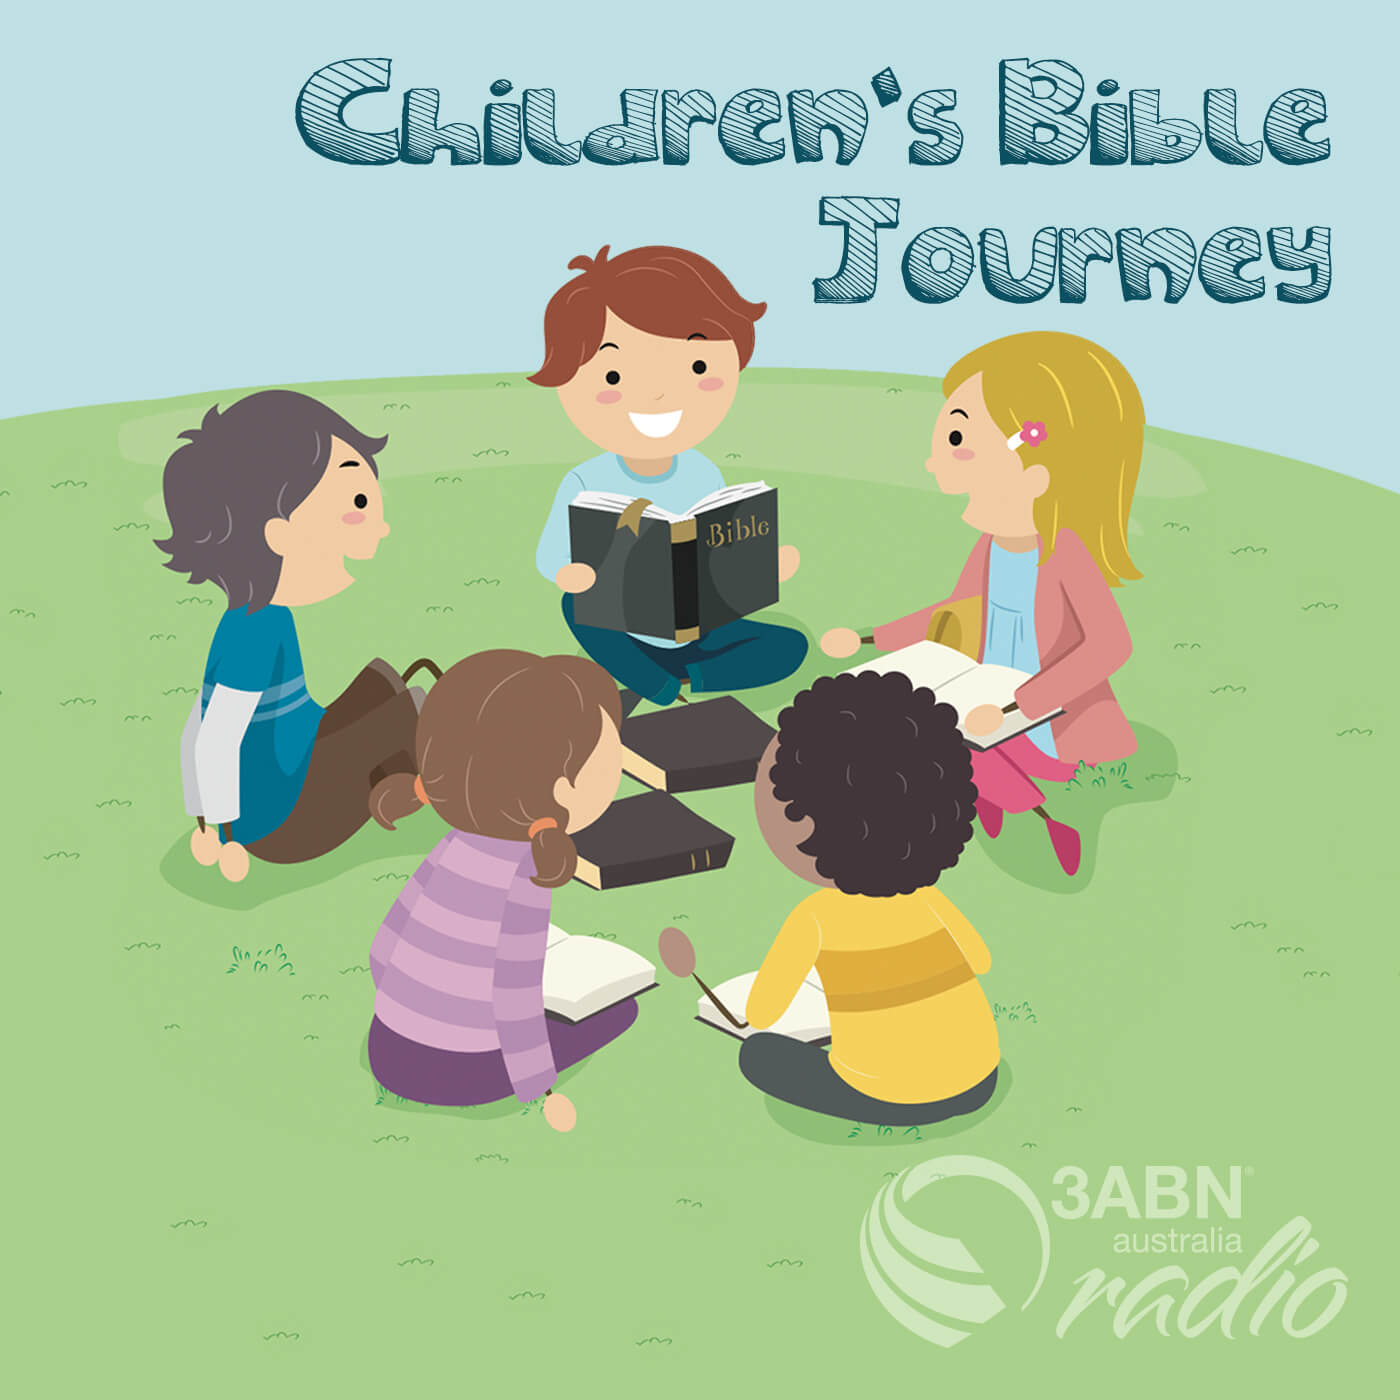 Children's Bible Journey - 2222